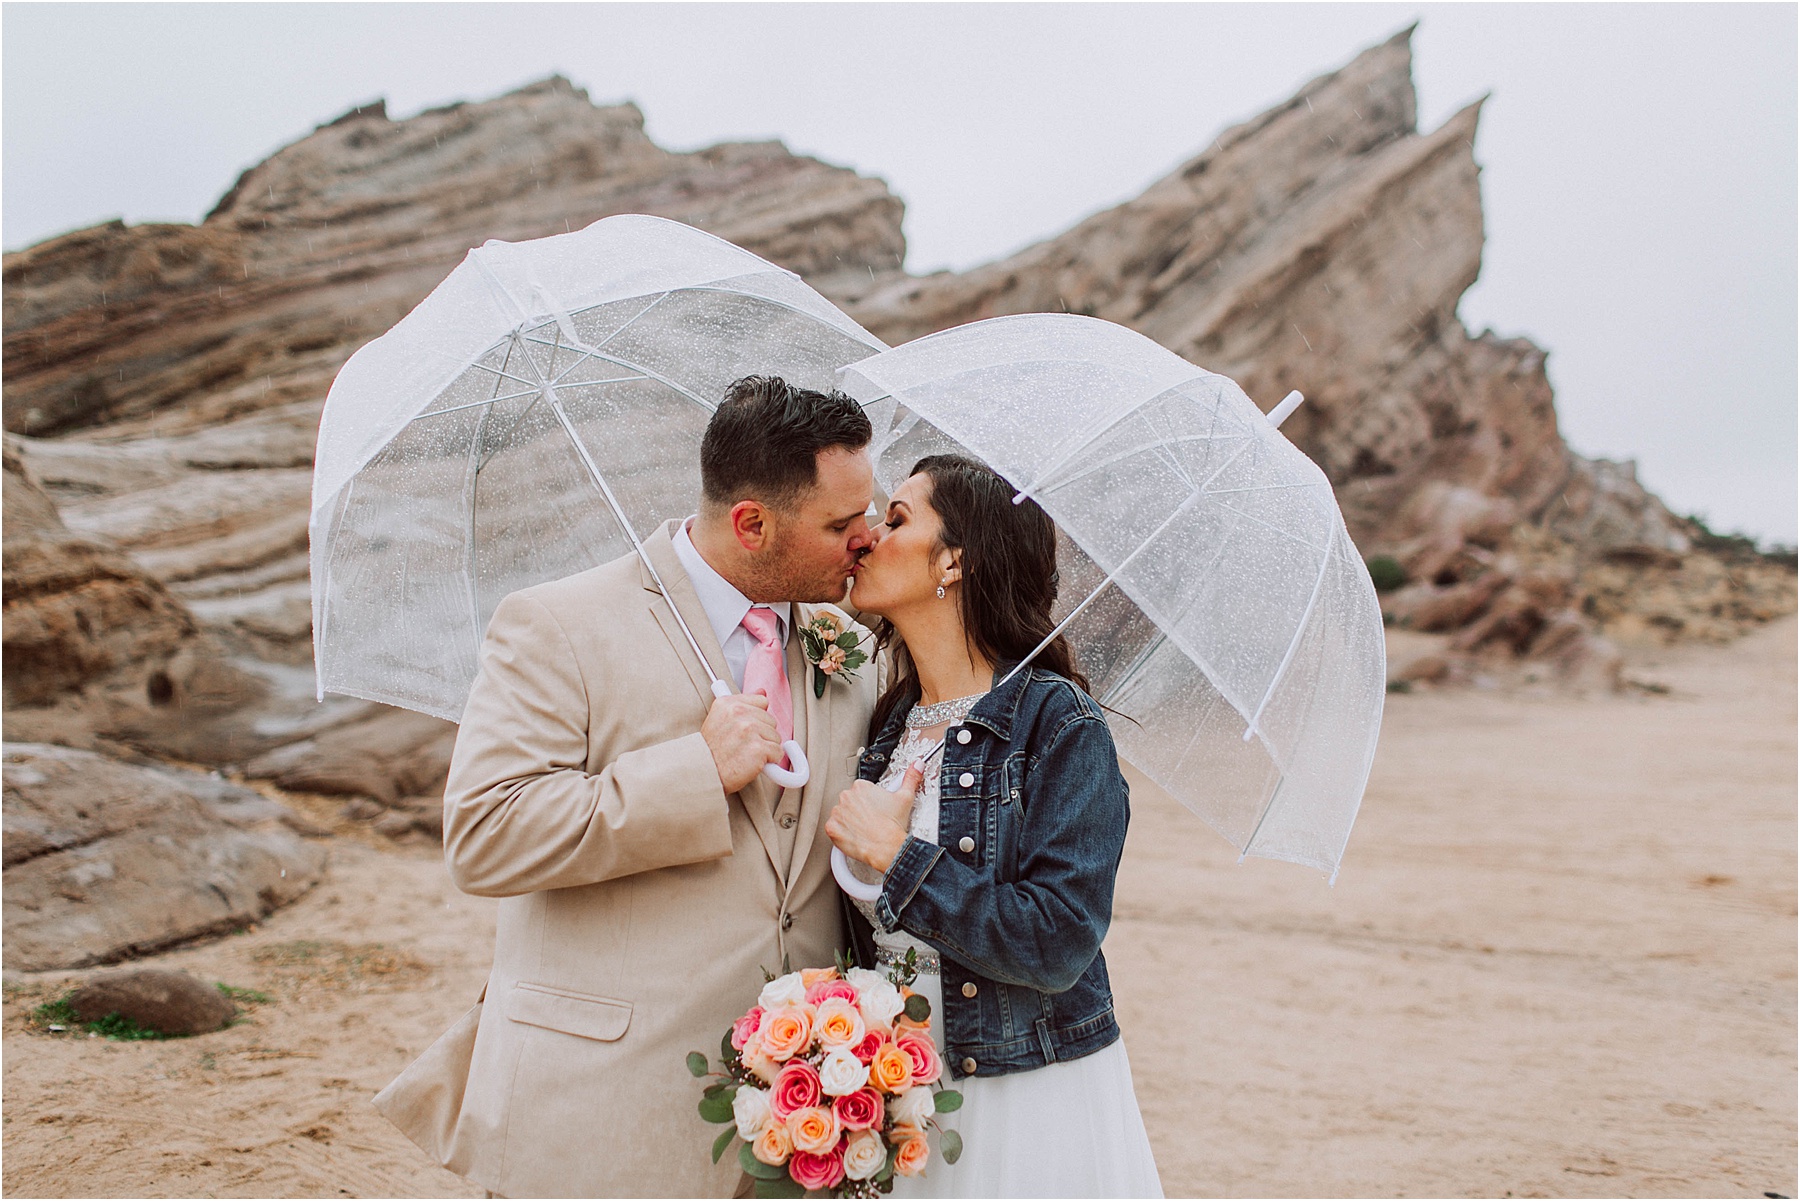 Vasquez Rocks Intimate Wedding & Elopement Photography - Bride & Groom Portraits in the rain with umbrellas